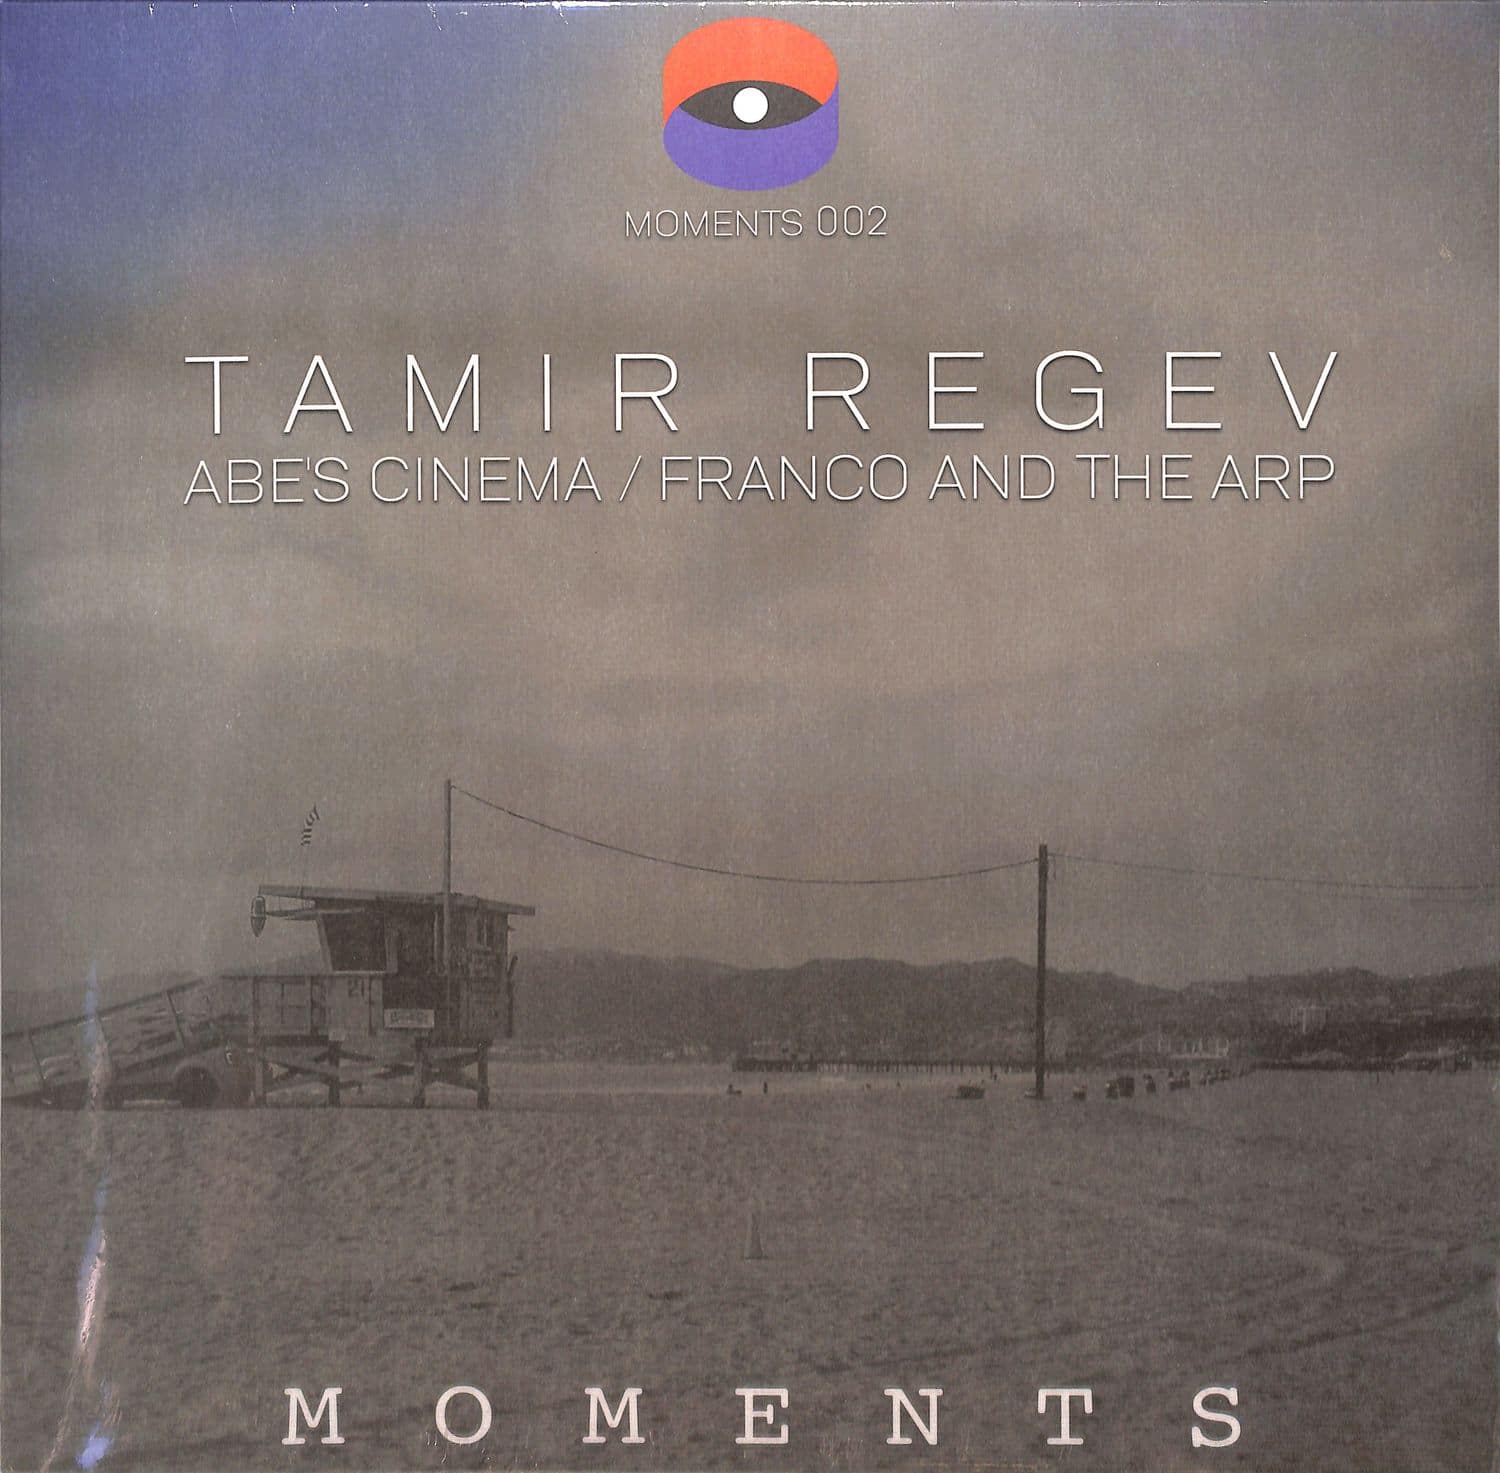 Tamir Regev - ABES CINEMA / FRANCO AND THE ARP